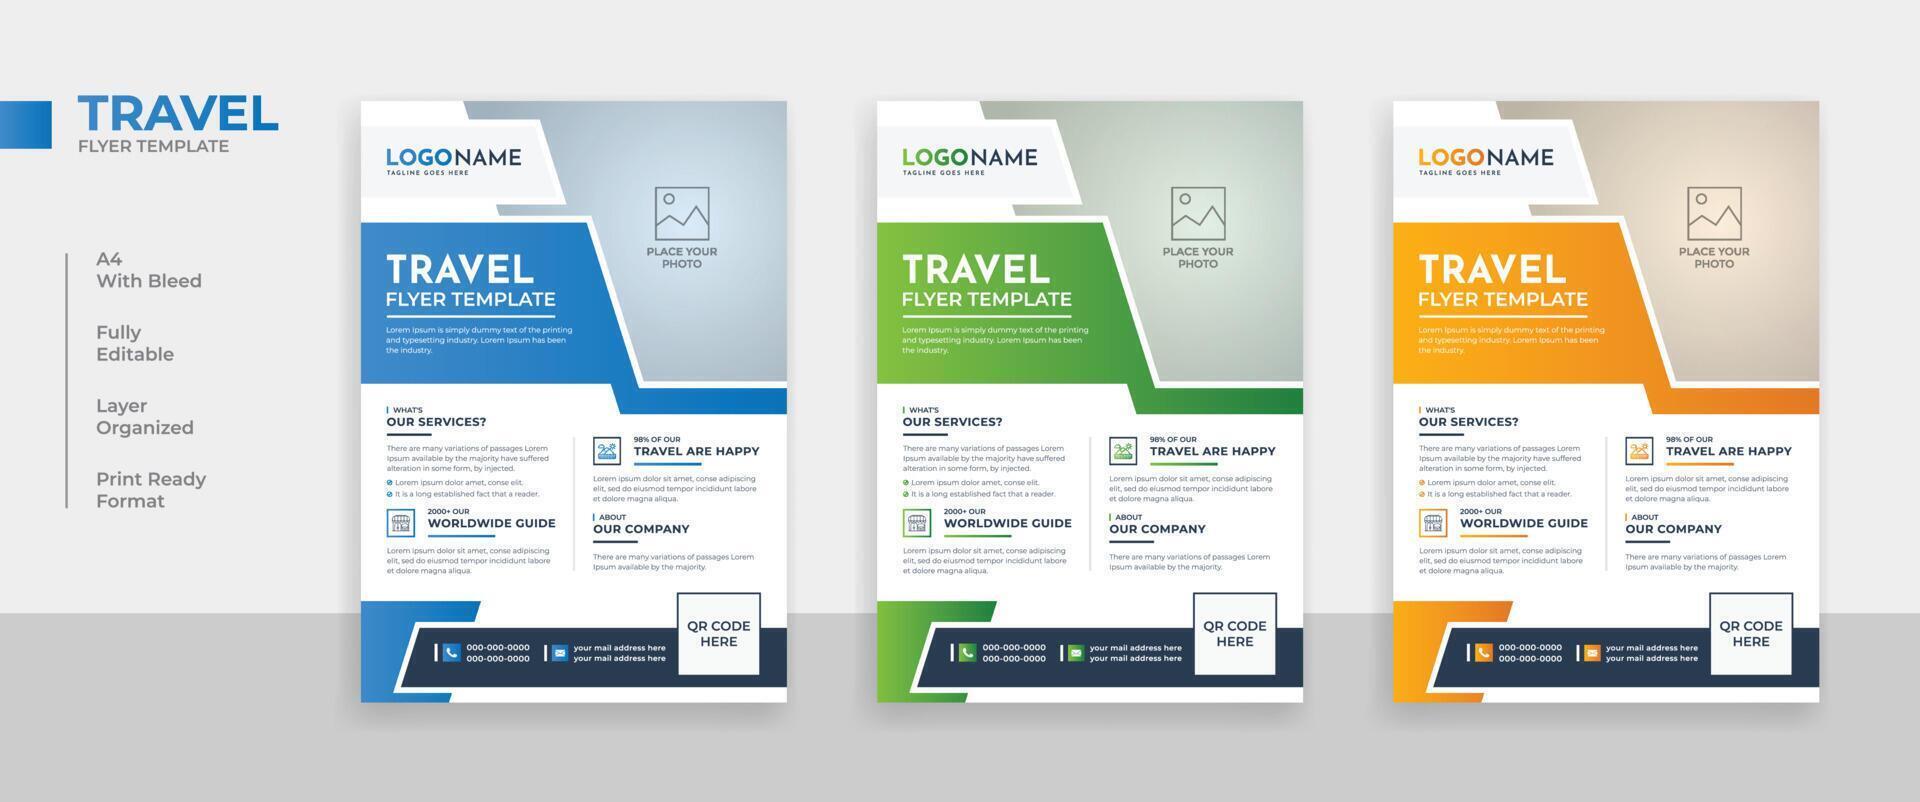 modern reizen agentschap folder sjabloon ontwerp, op reis poster sjabloon lay-out vector